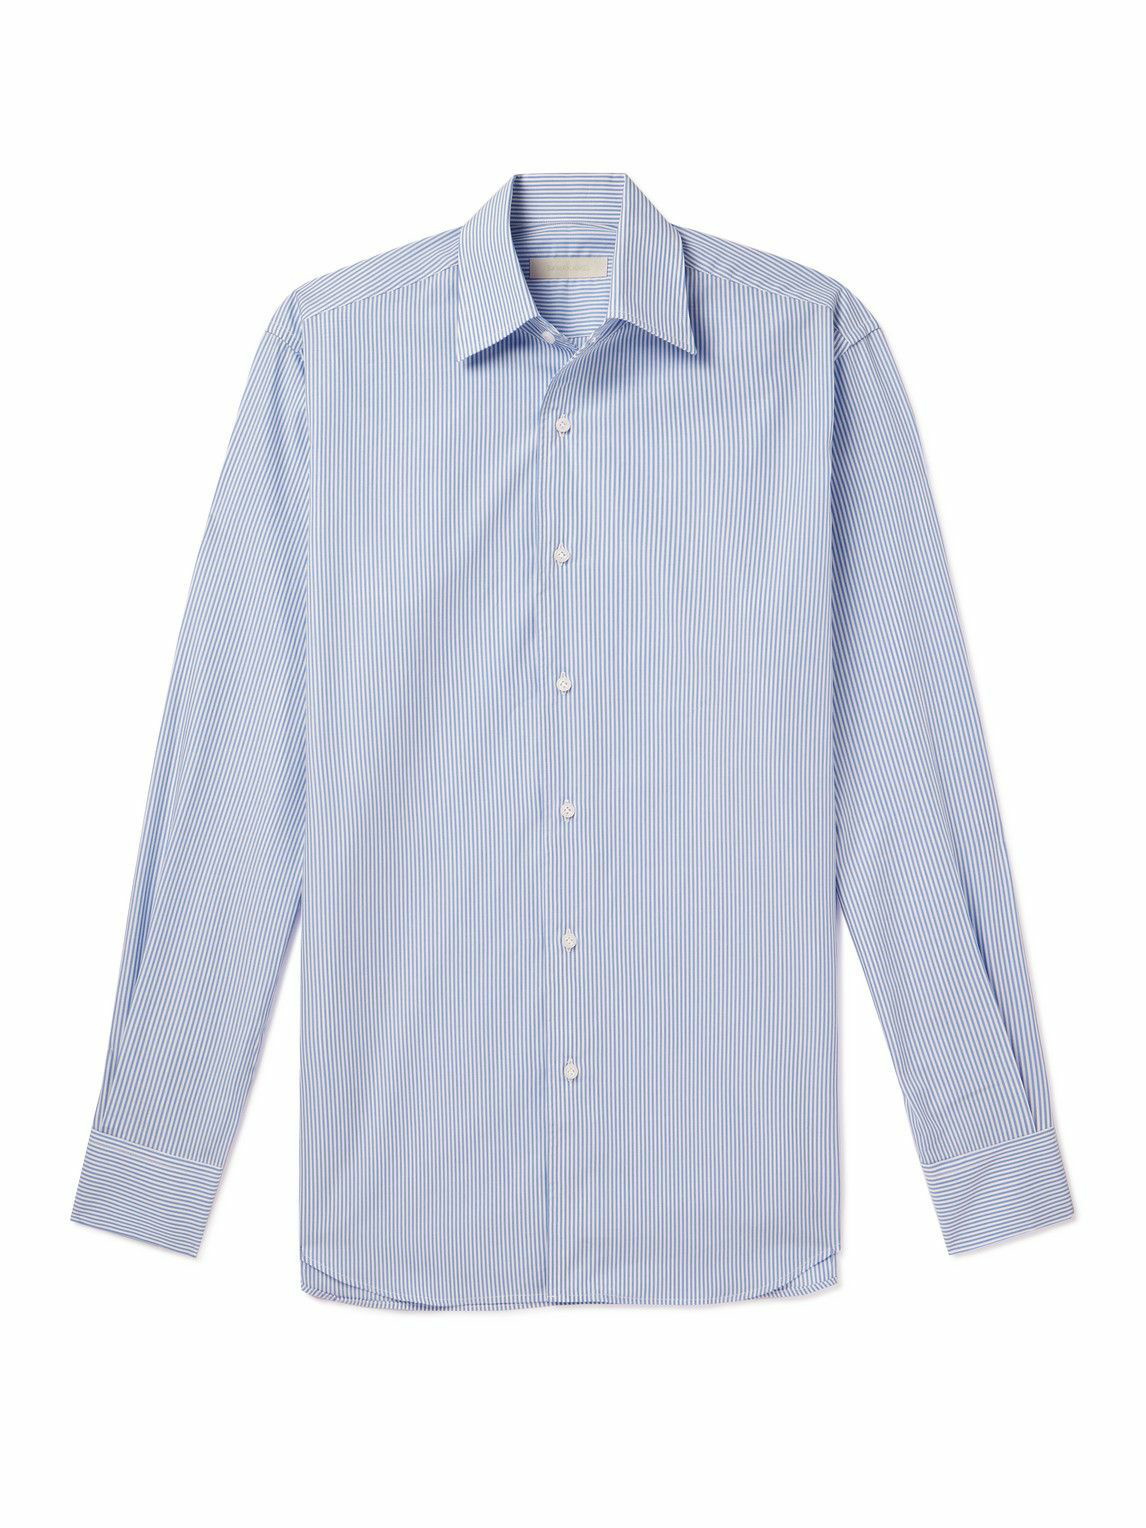 Saman Amel - Striped Cotton-Poplin Shirt - Blue Saman Amel